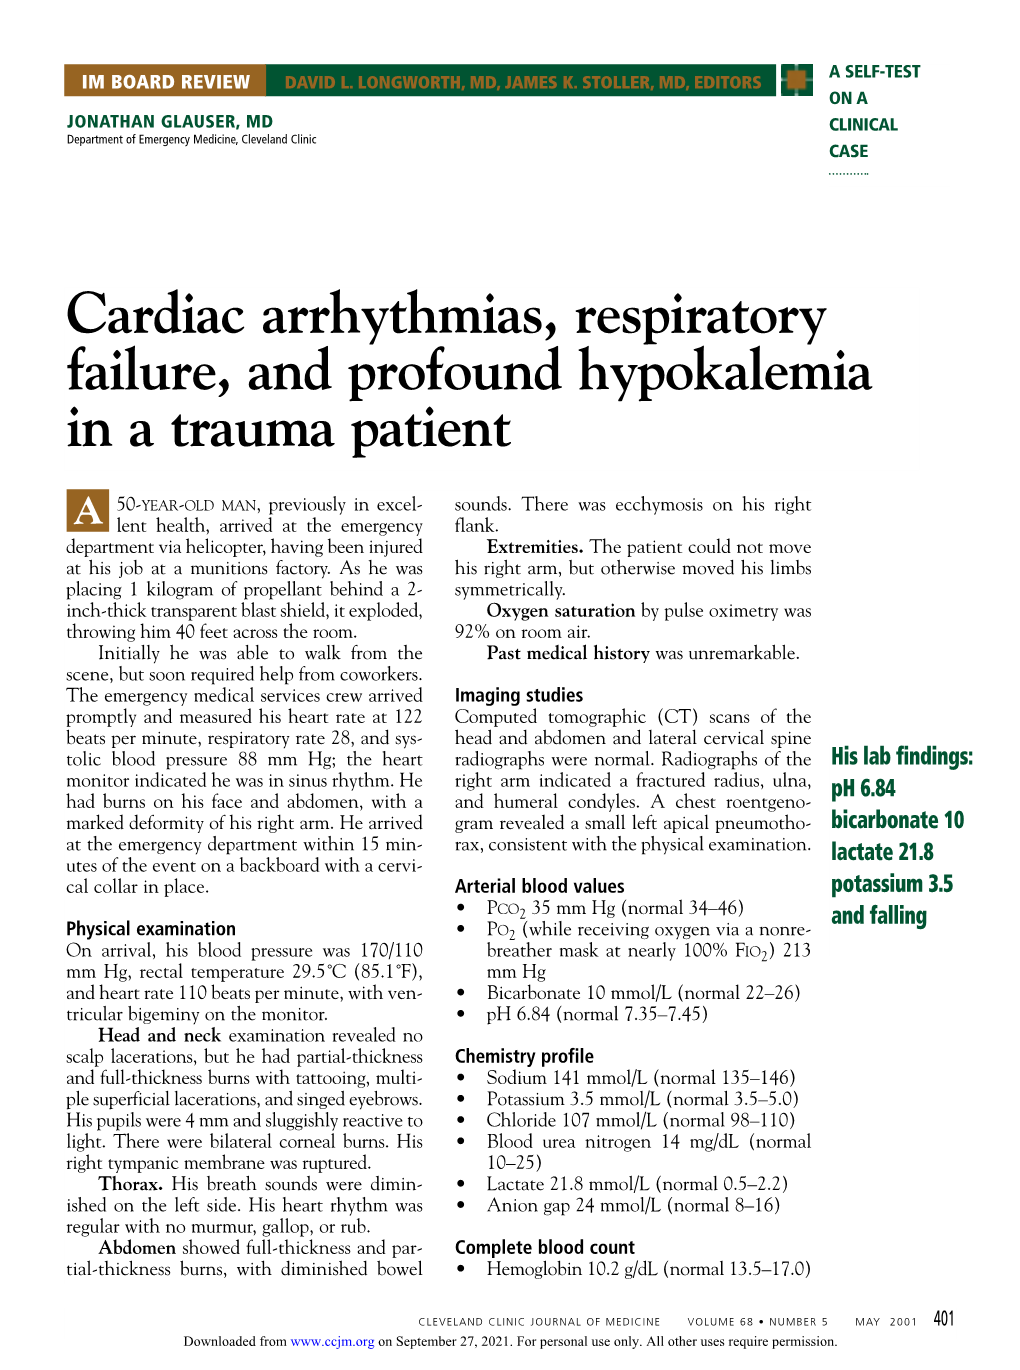 Cardiac Arrhythmias, Respiratory Failure, and Profound Hypokalemia in a Trauma Patient